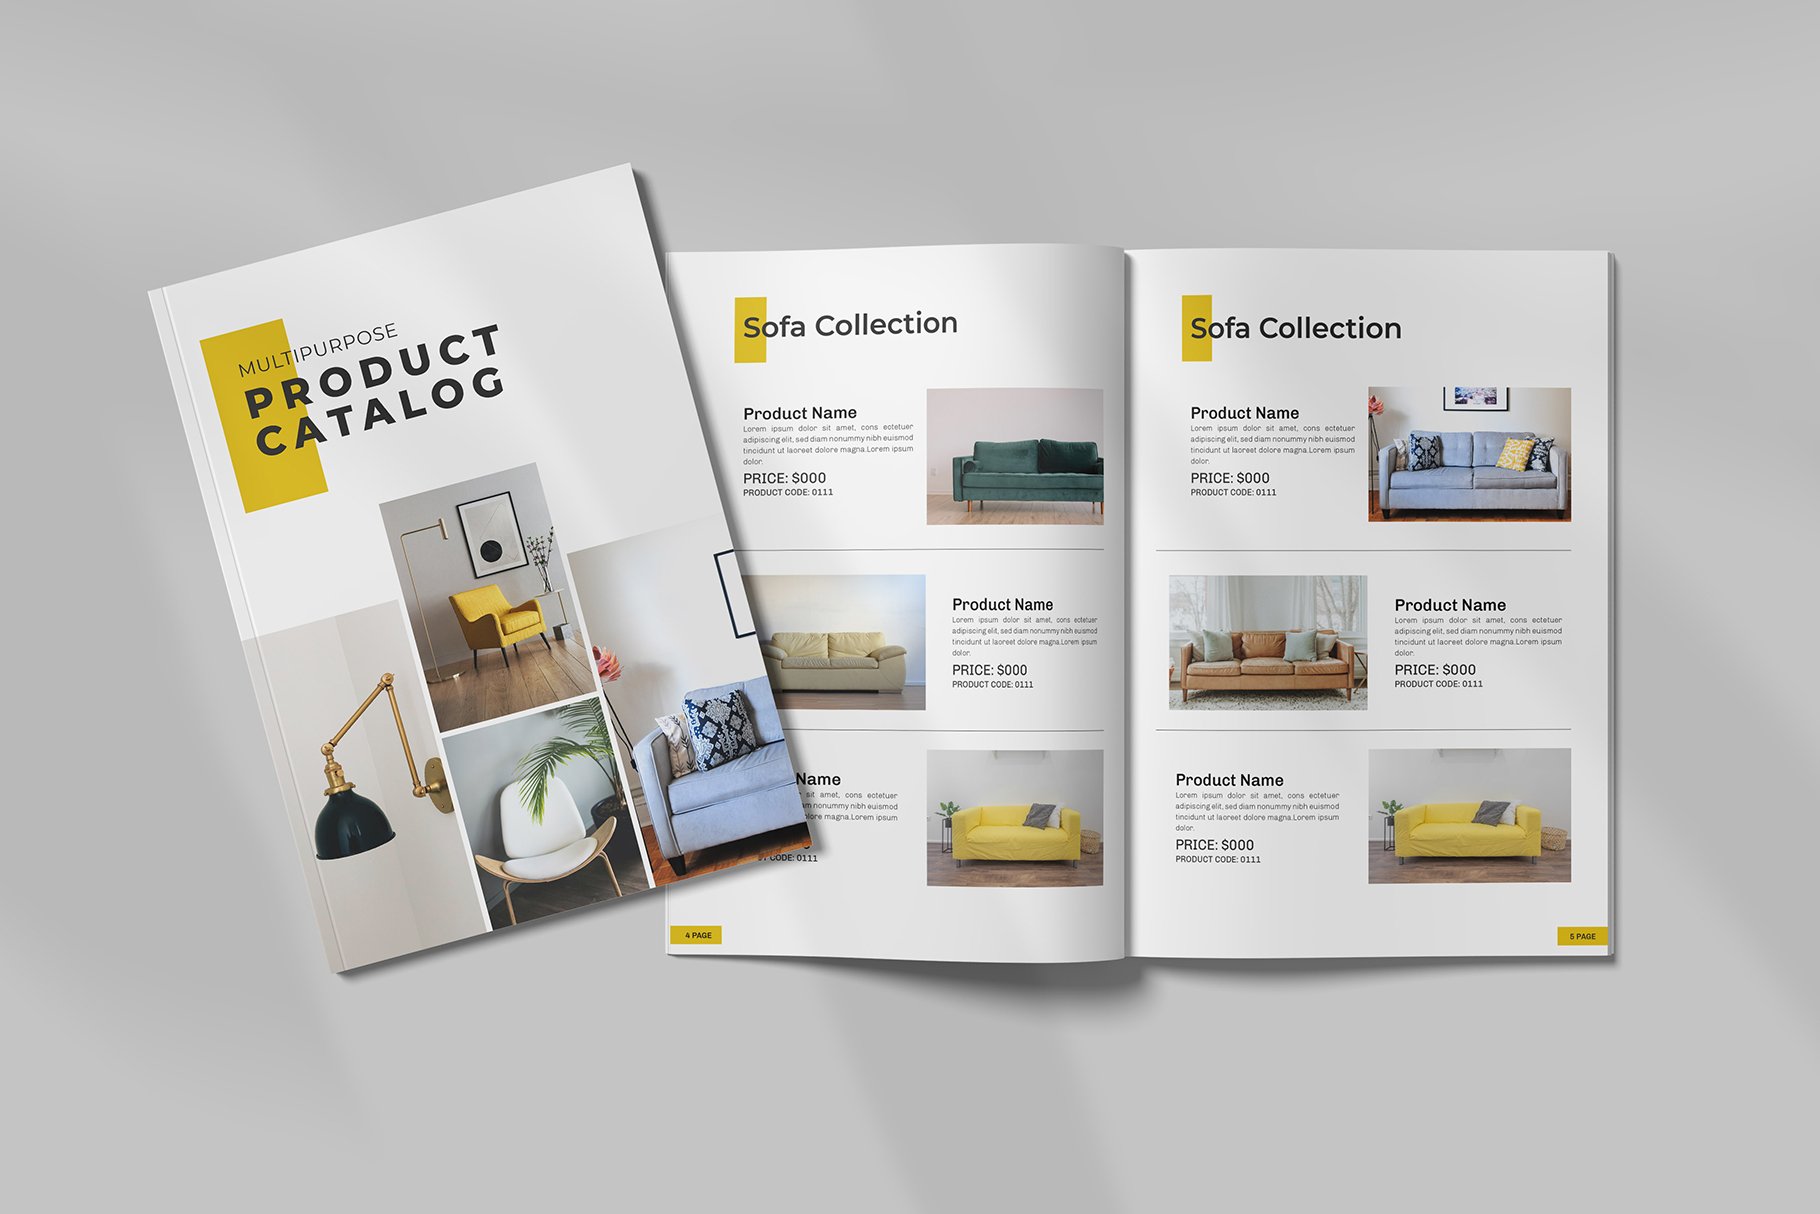 Multipurpose Product Catalog Design cover image.